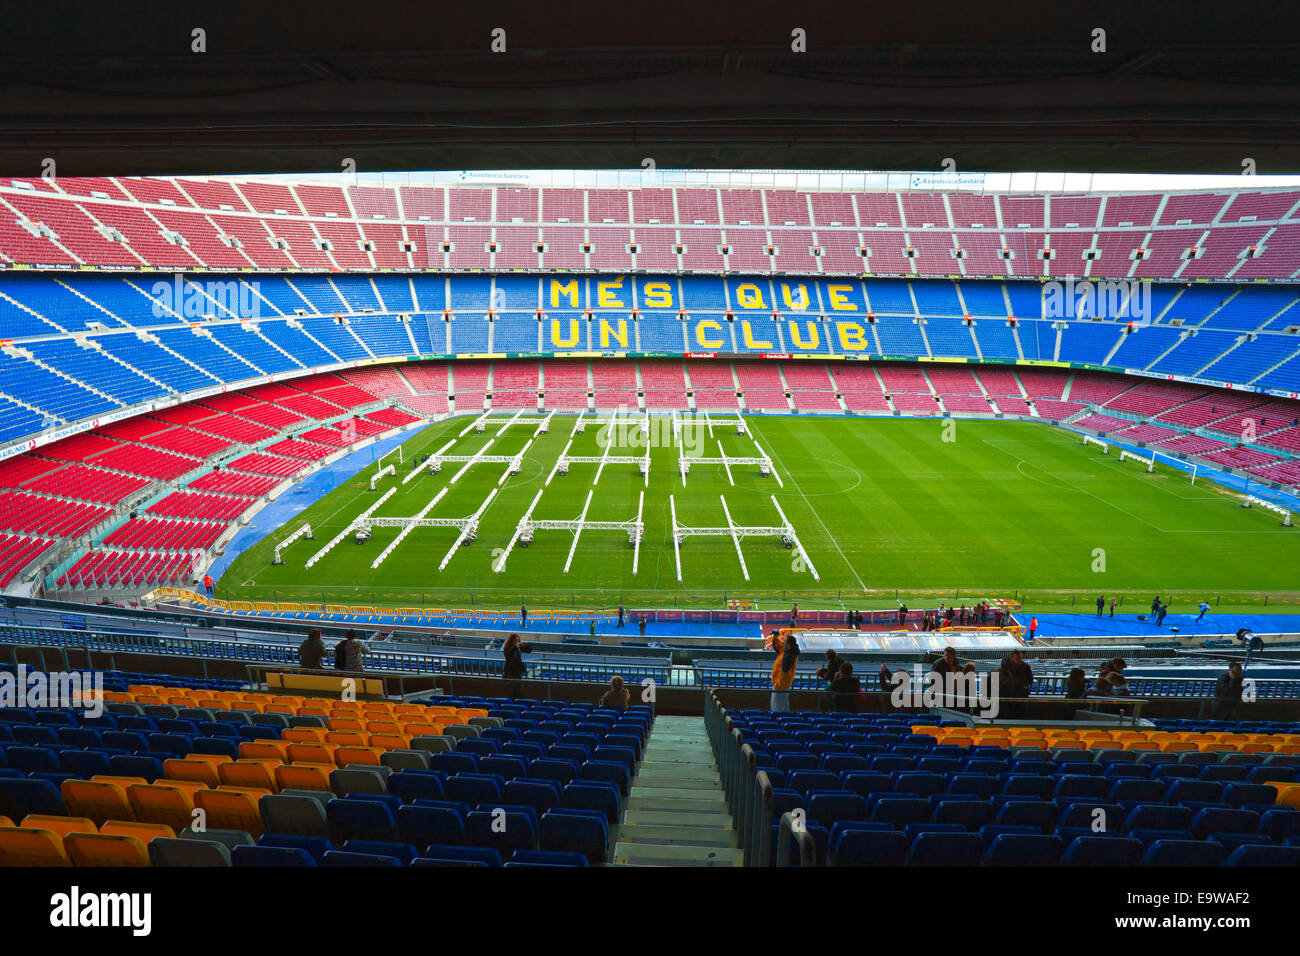 Camp Nou, Stadium of Football Club Barcelona on December 19, 2011 in Barcelona, Spain. Stock Photo